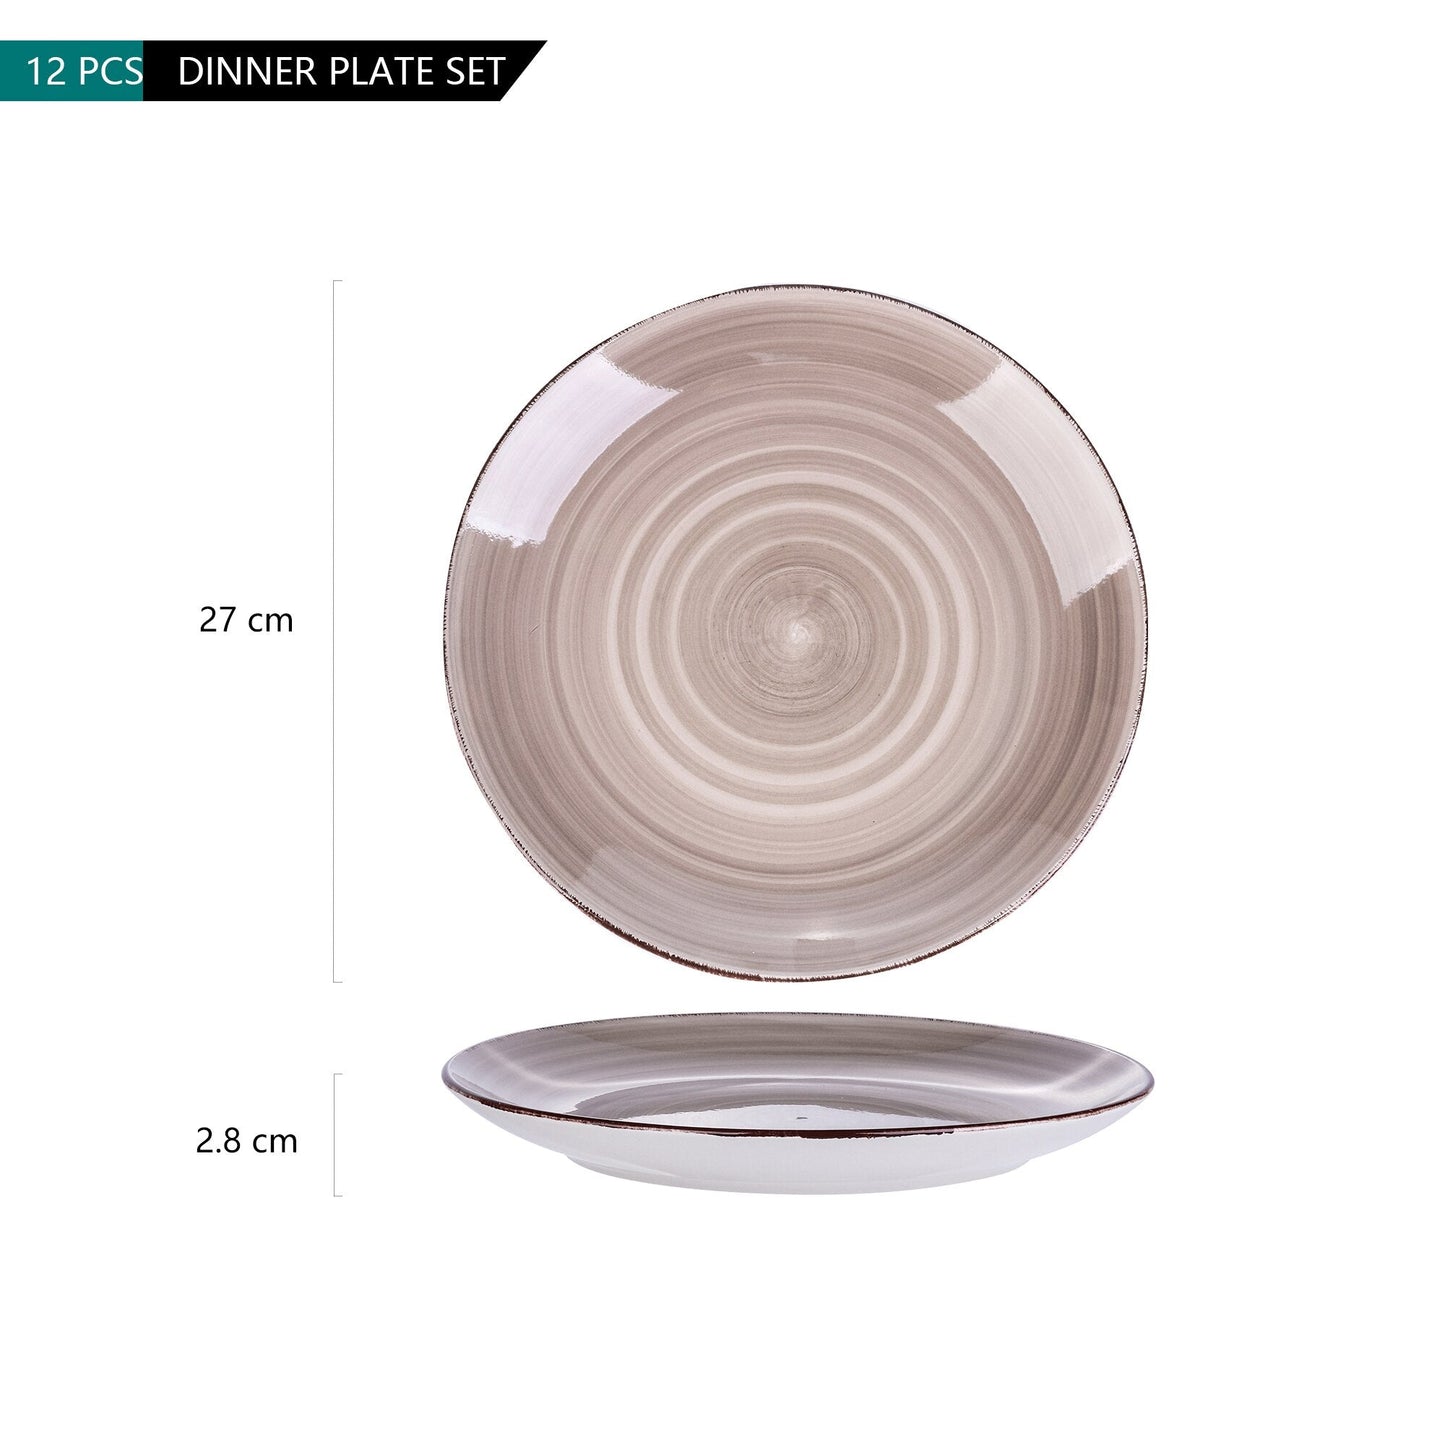 Bella-C 4/8/12-pieces Porcelain Ceramic Handpainted Dinner Plate Set - Nordic Side - 272728, 4812, BellaC, Ceramic, cm, Dinner, DinnerSaladFruitSnack, Handpainted, pieces, Plate, Porcelain, S